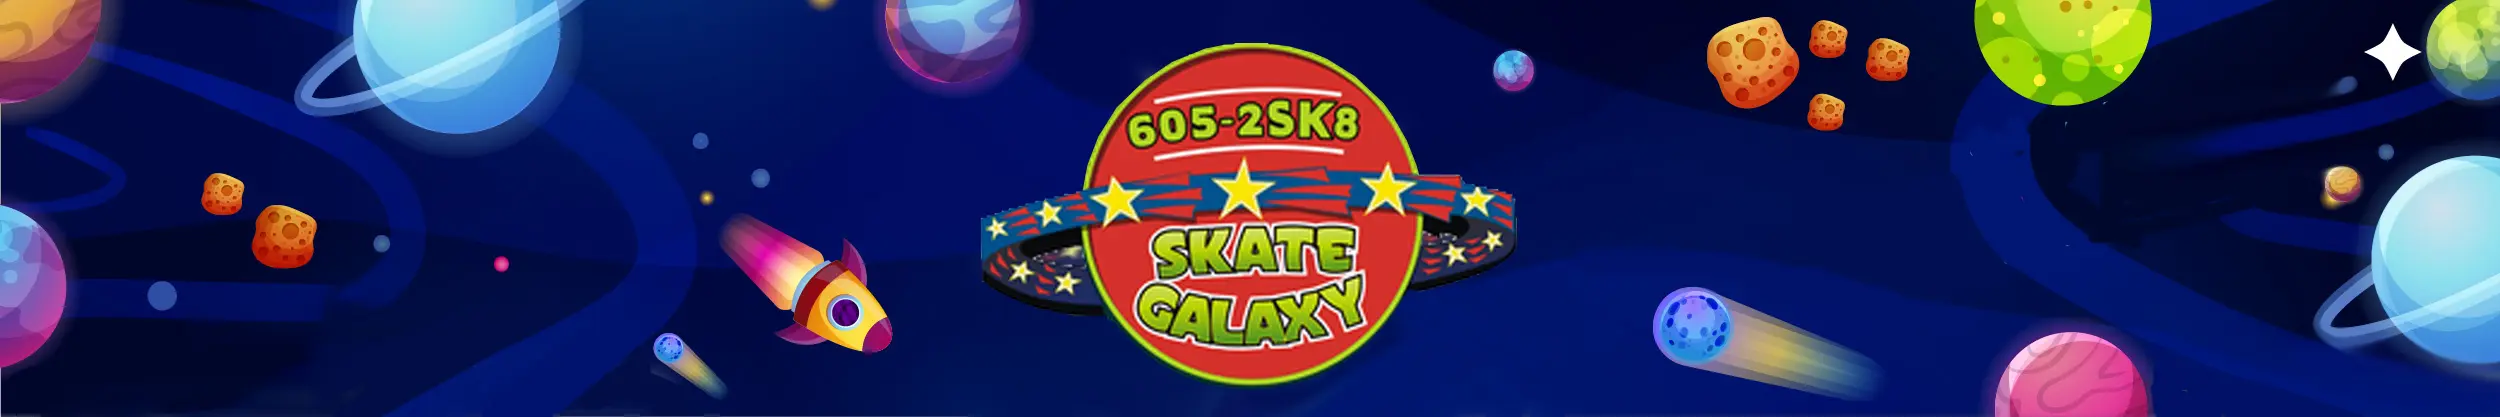 Skate Galaxy OKC Logo